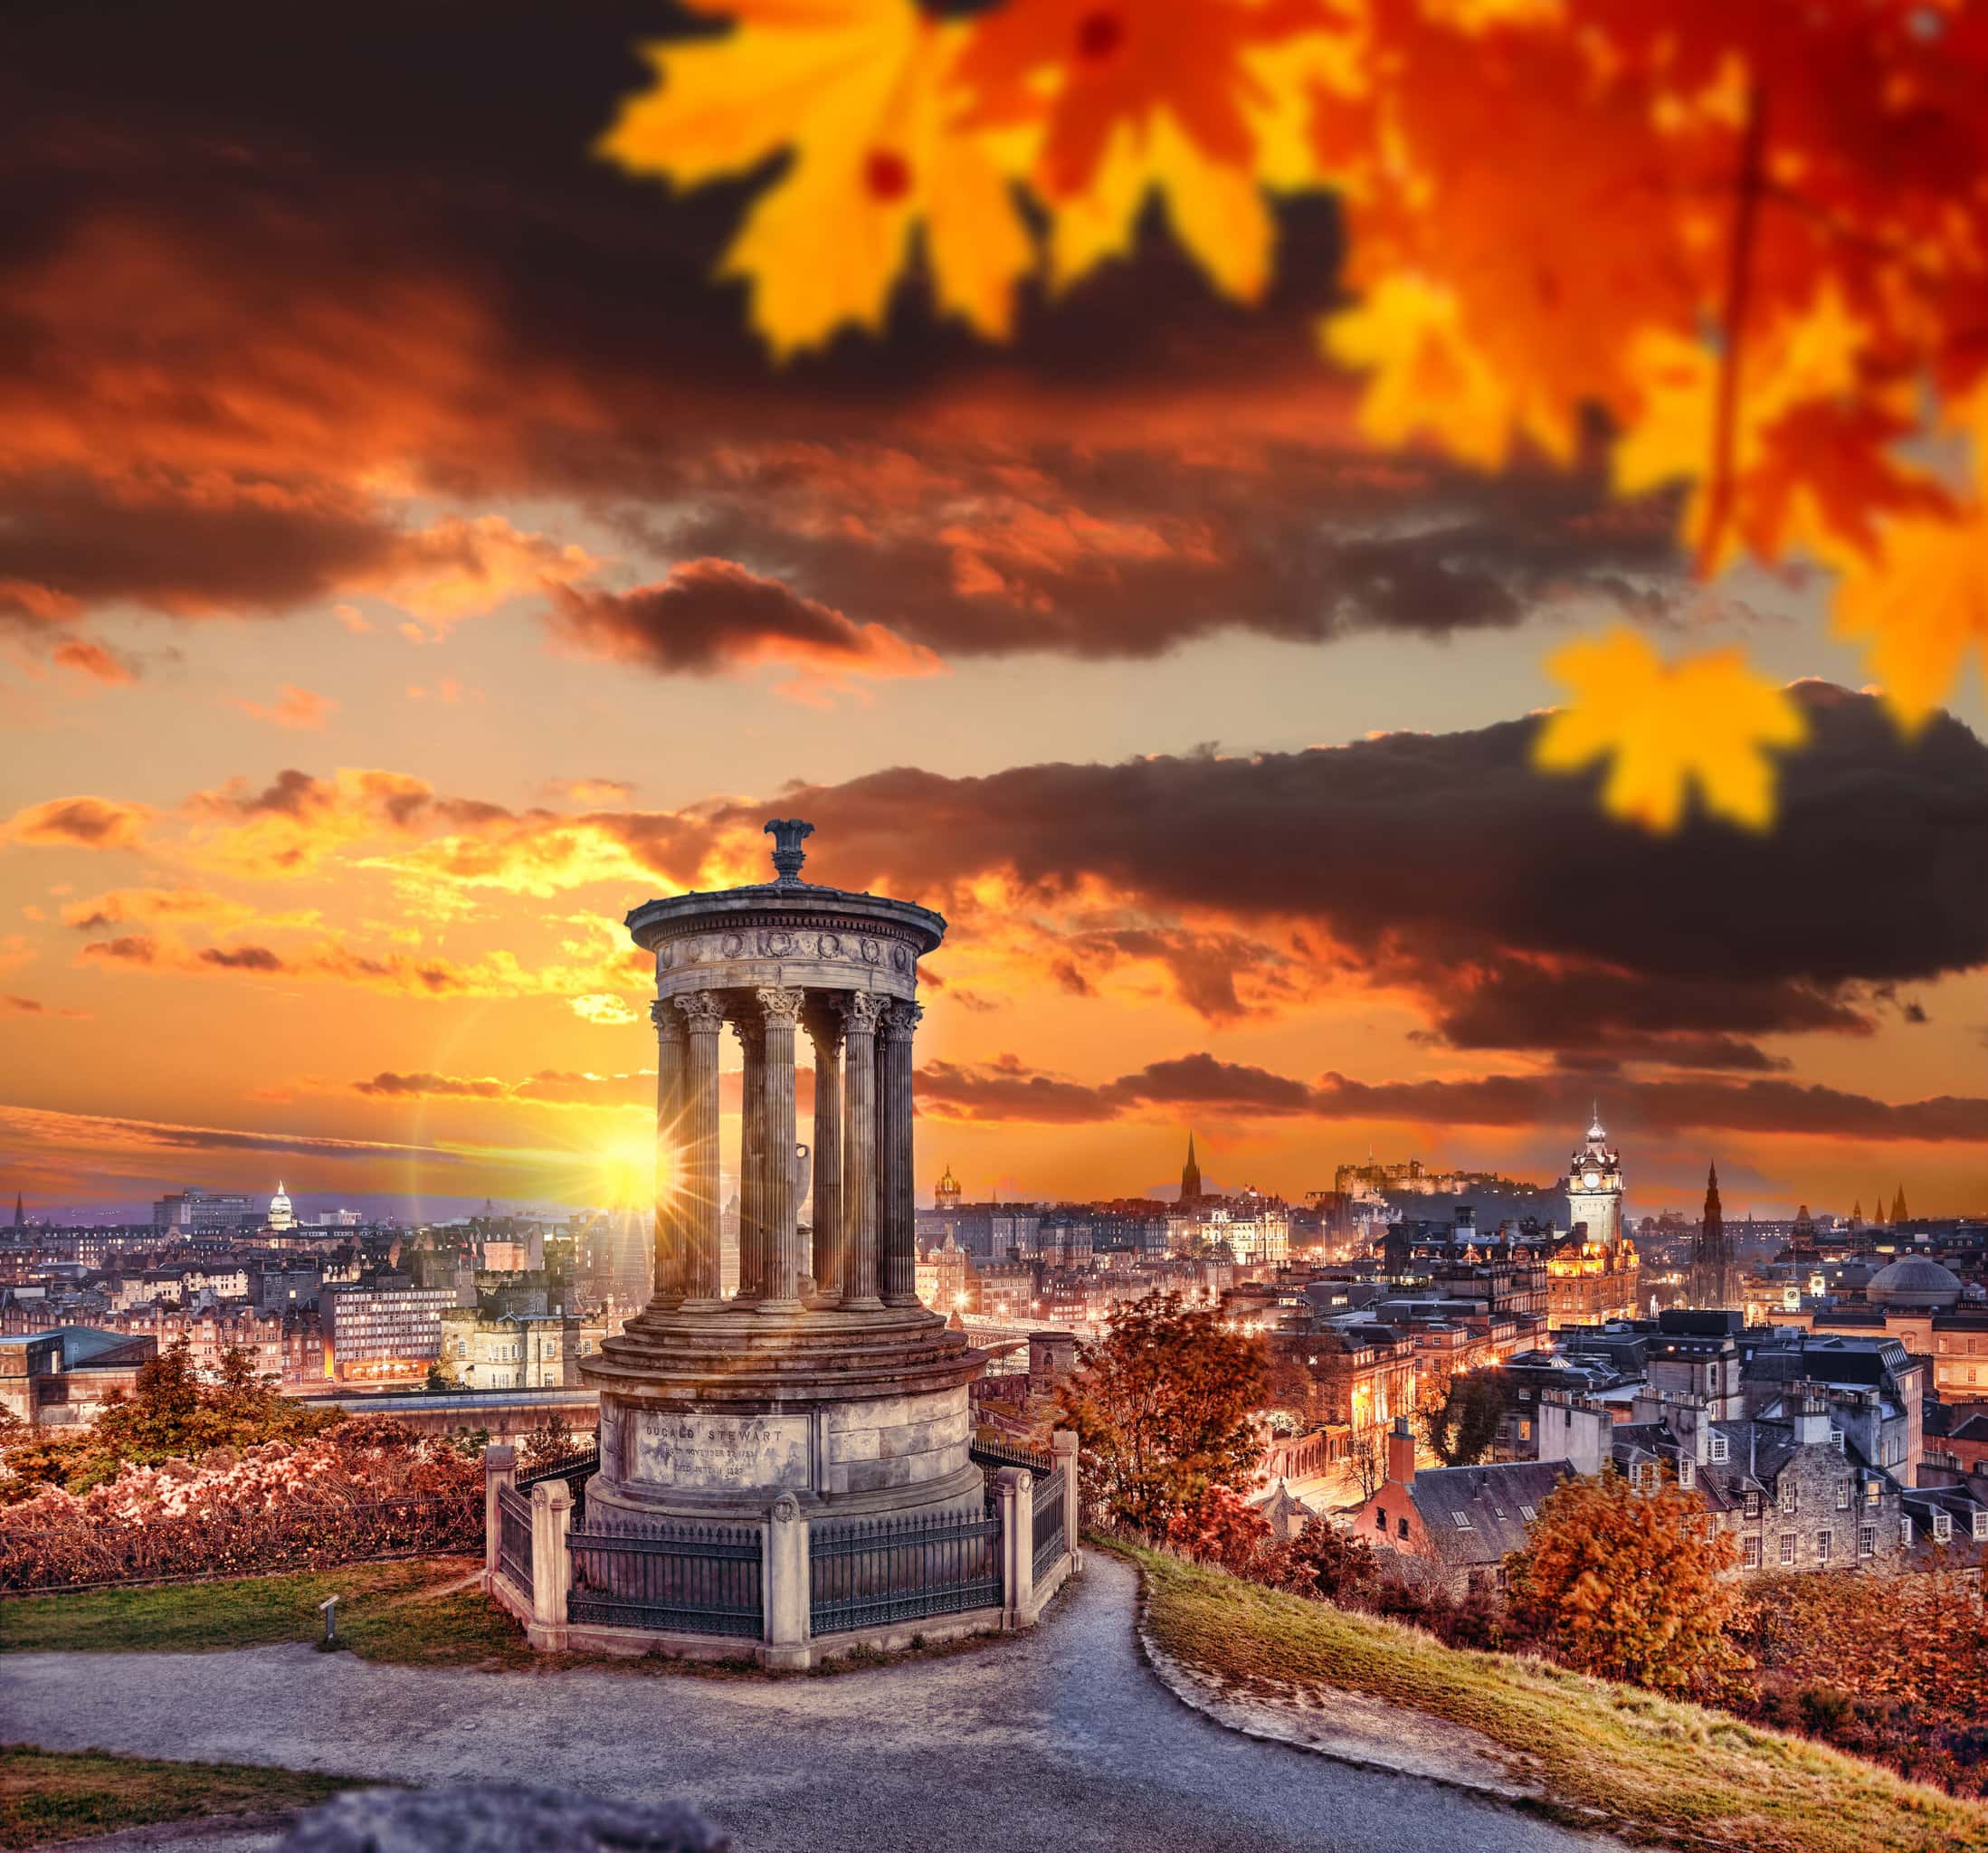 Edinburgh with Calton Hill against autumn leaves in Scotland. By Tomas Marek